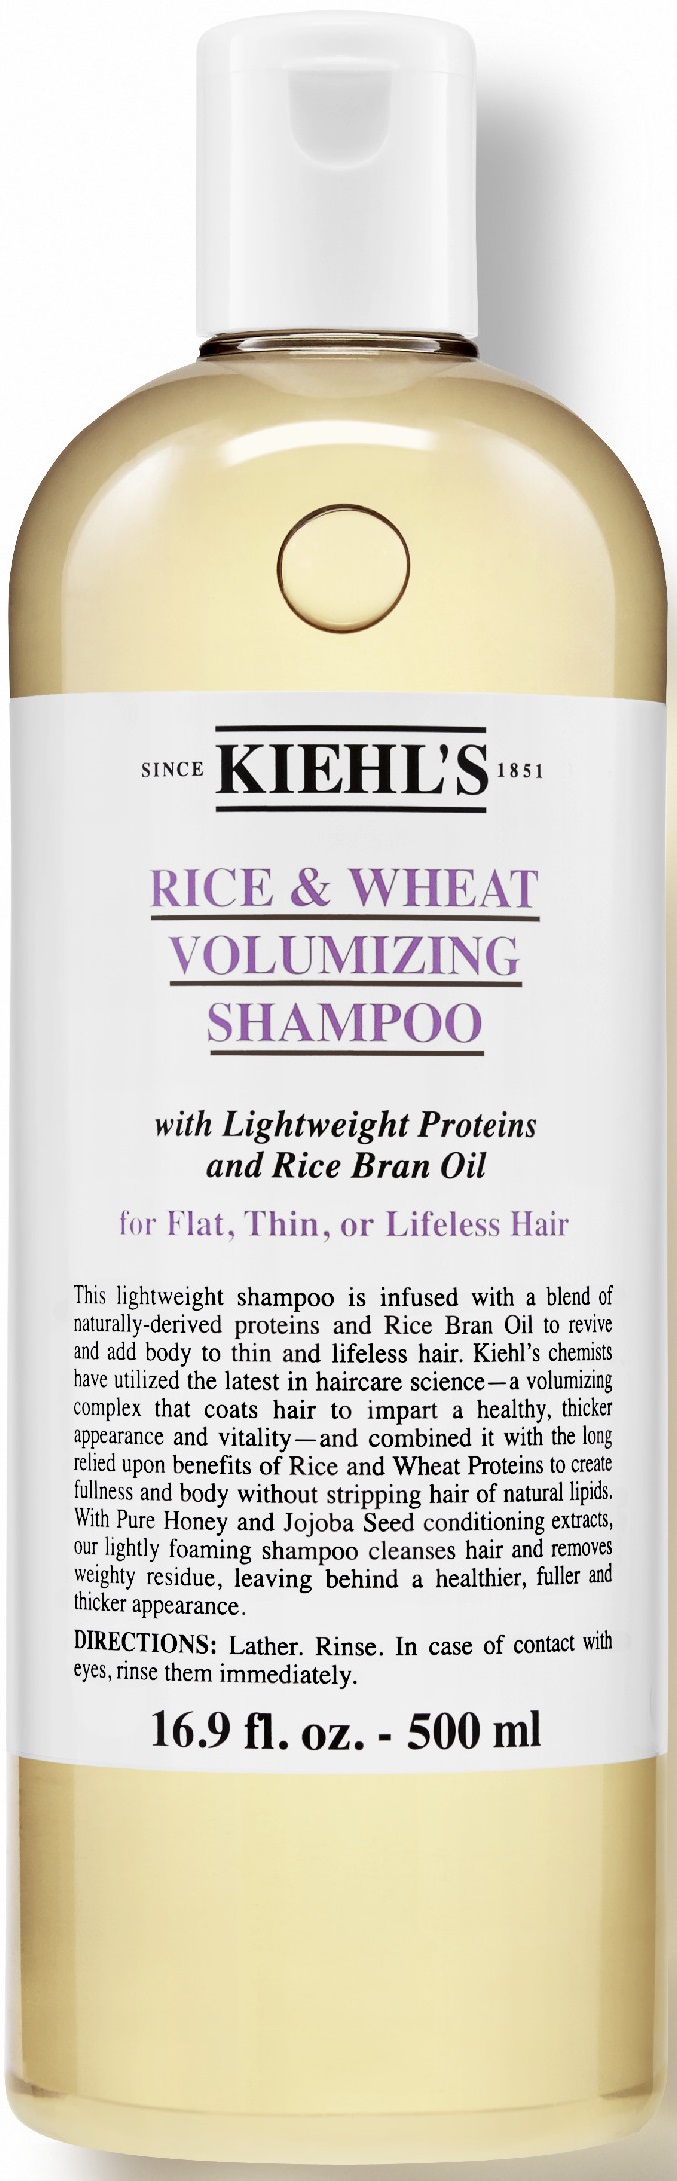 Kiehl's Rice & Wheat lyko.com